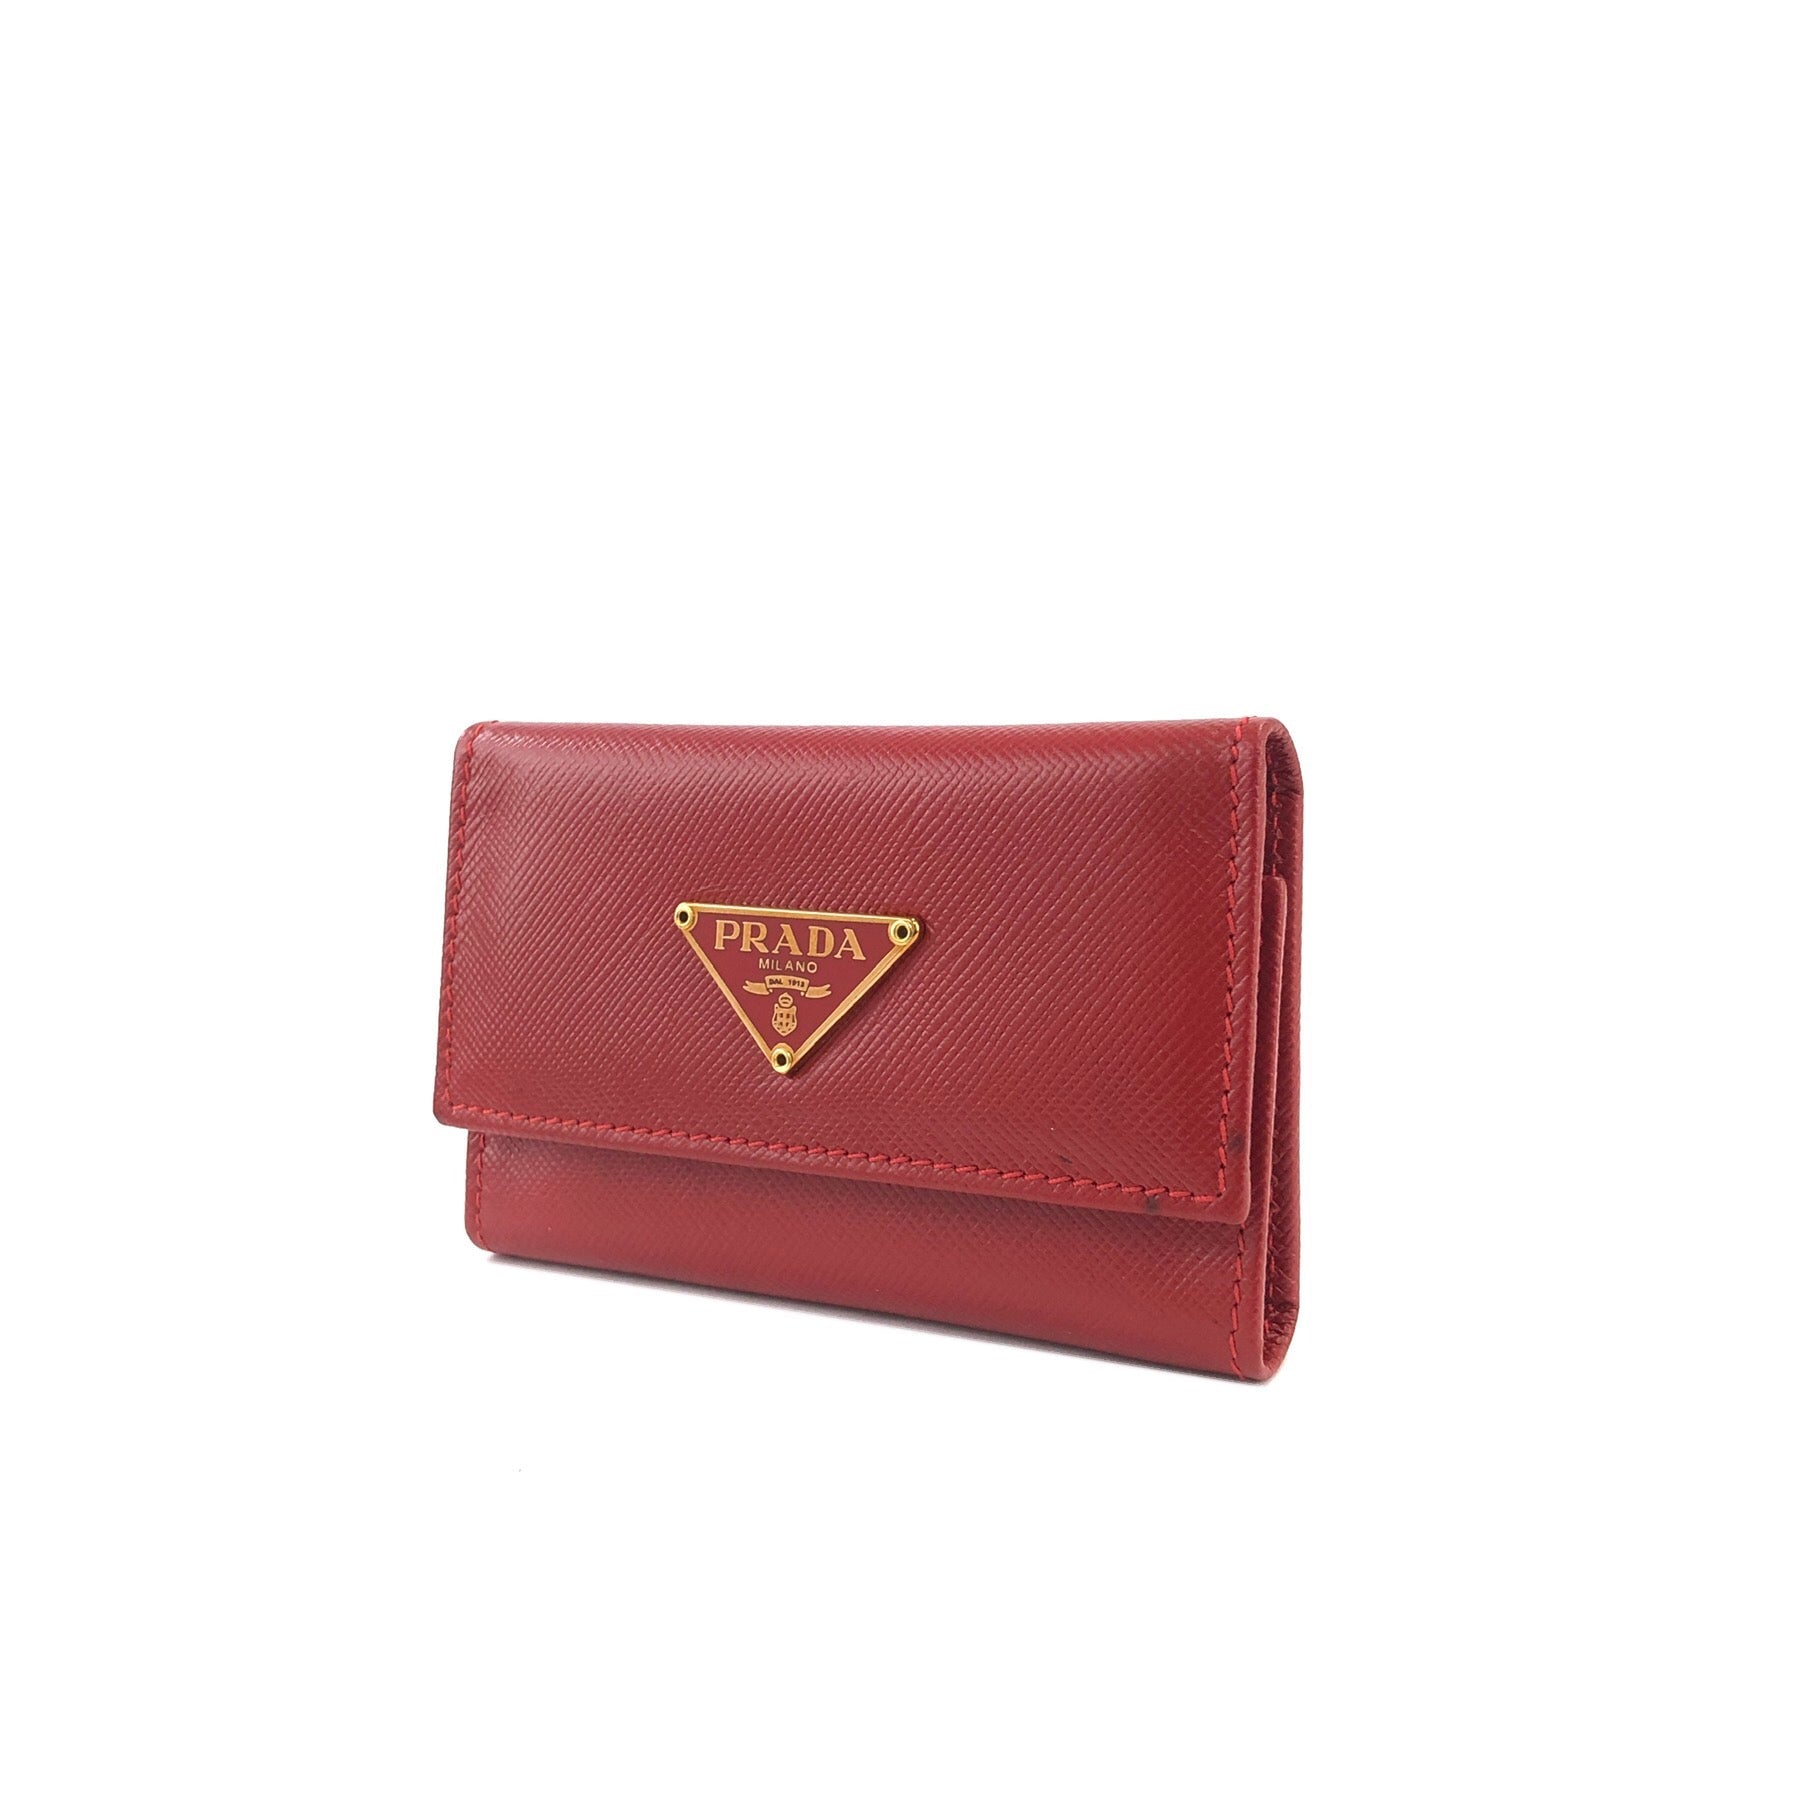 Prada Saffiano Leather Red Key Holder Wallet